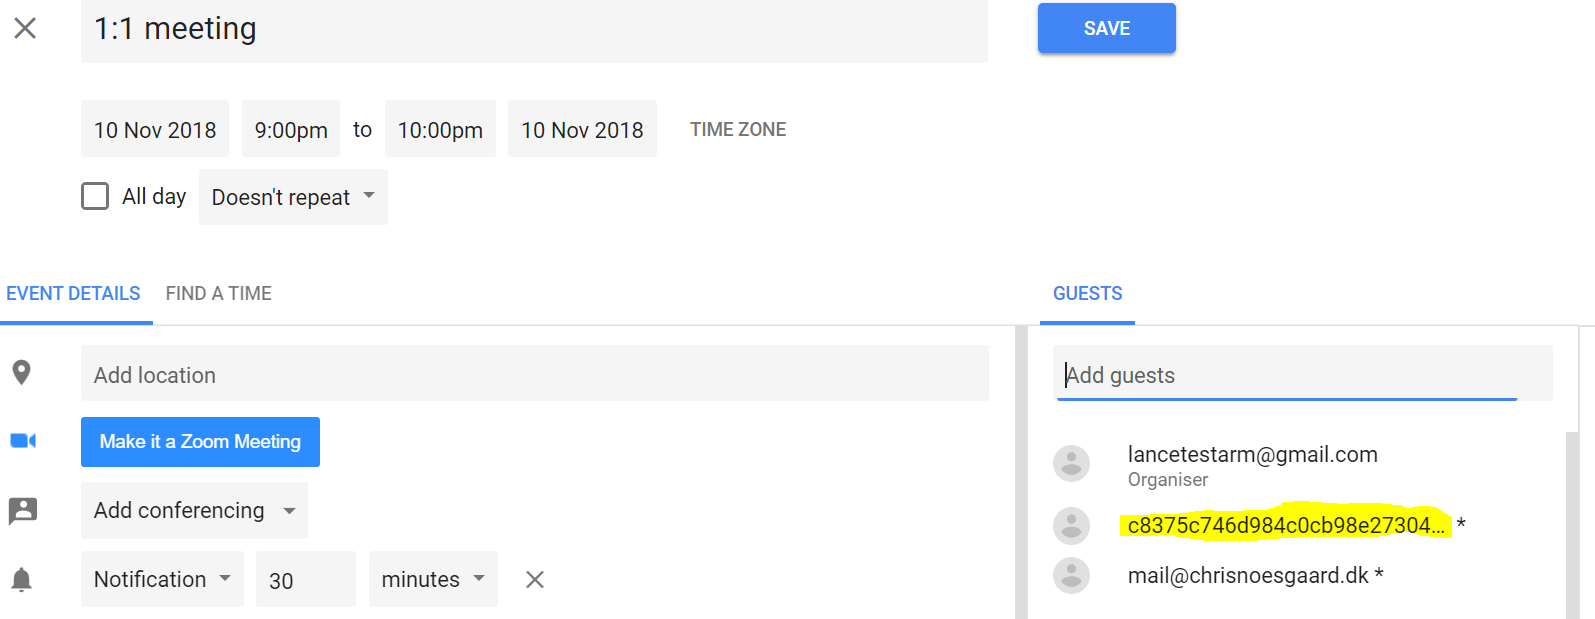 Schedule Google Calendar